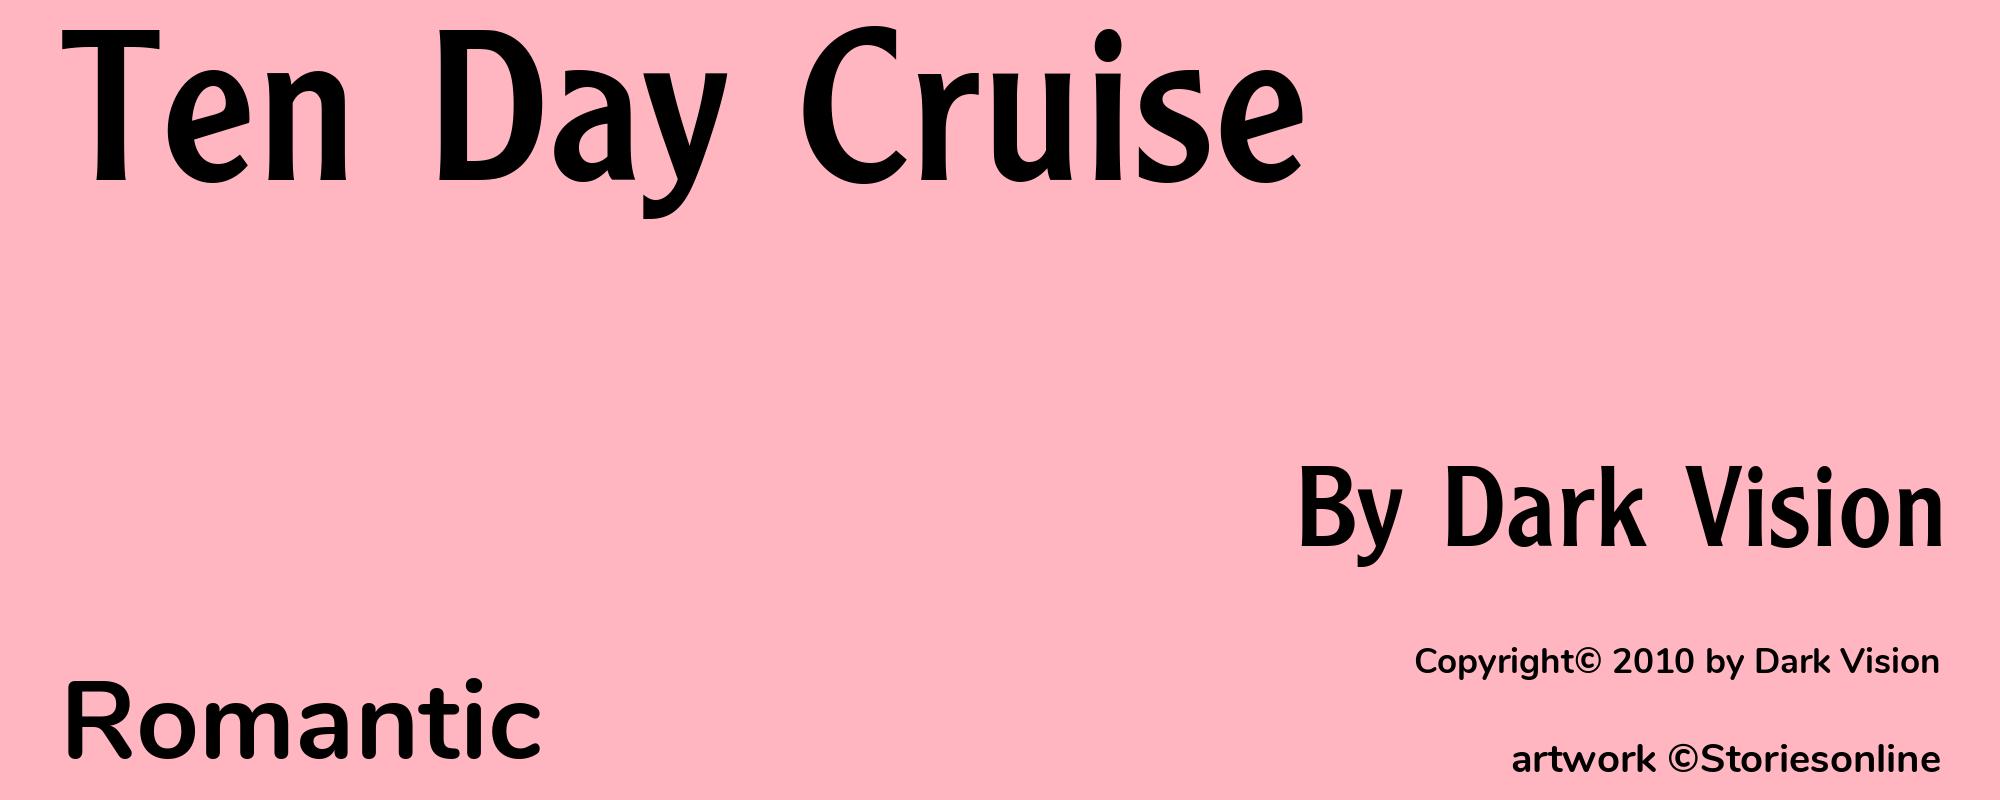 Ten Day Cruise - Cover